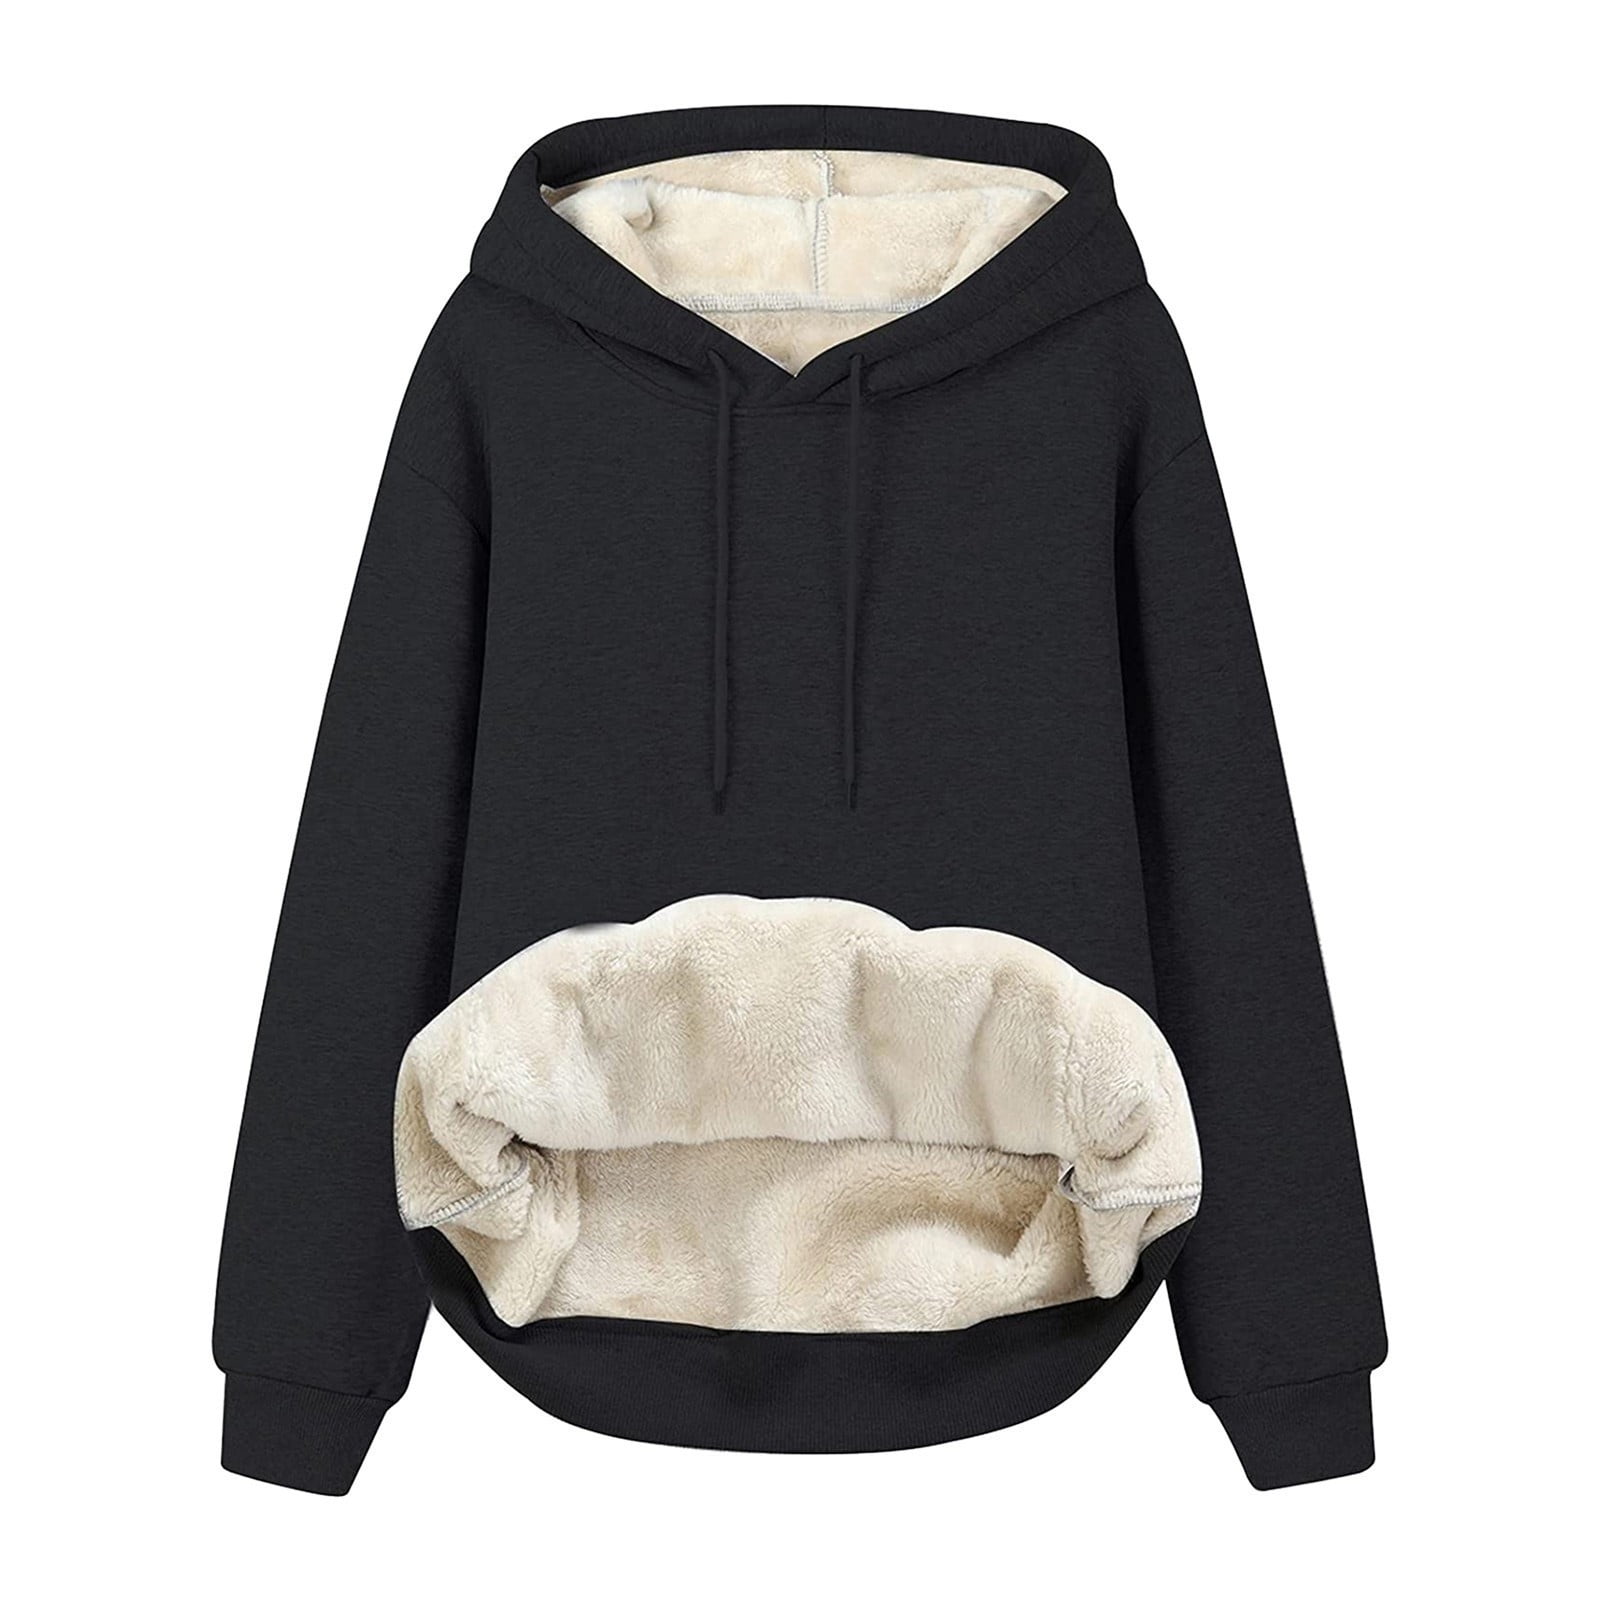 JWZUY Women's Sherpa Lined Hoodies Warm Fleece Hooded Sweatshirt Casual  Thermal Hoodie with Pocket for Winter Black XL 